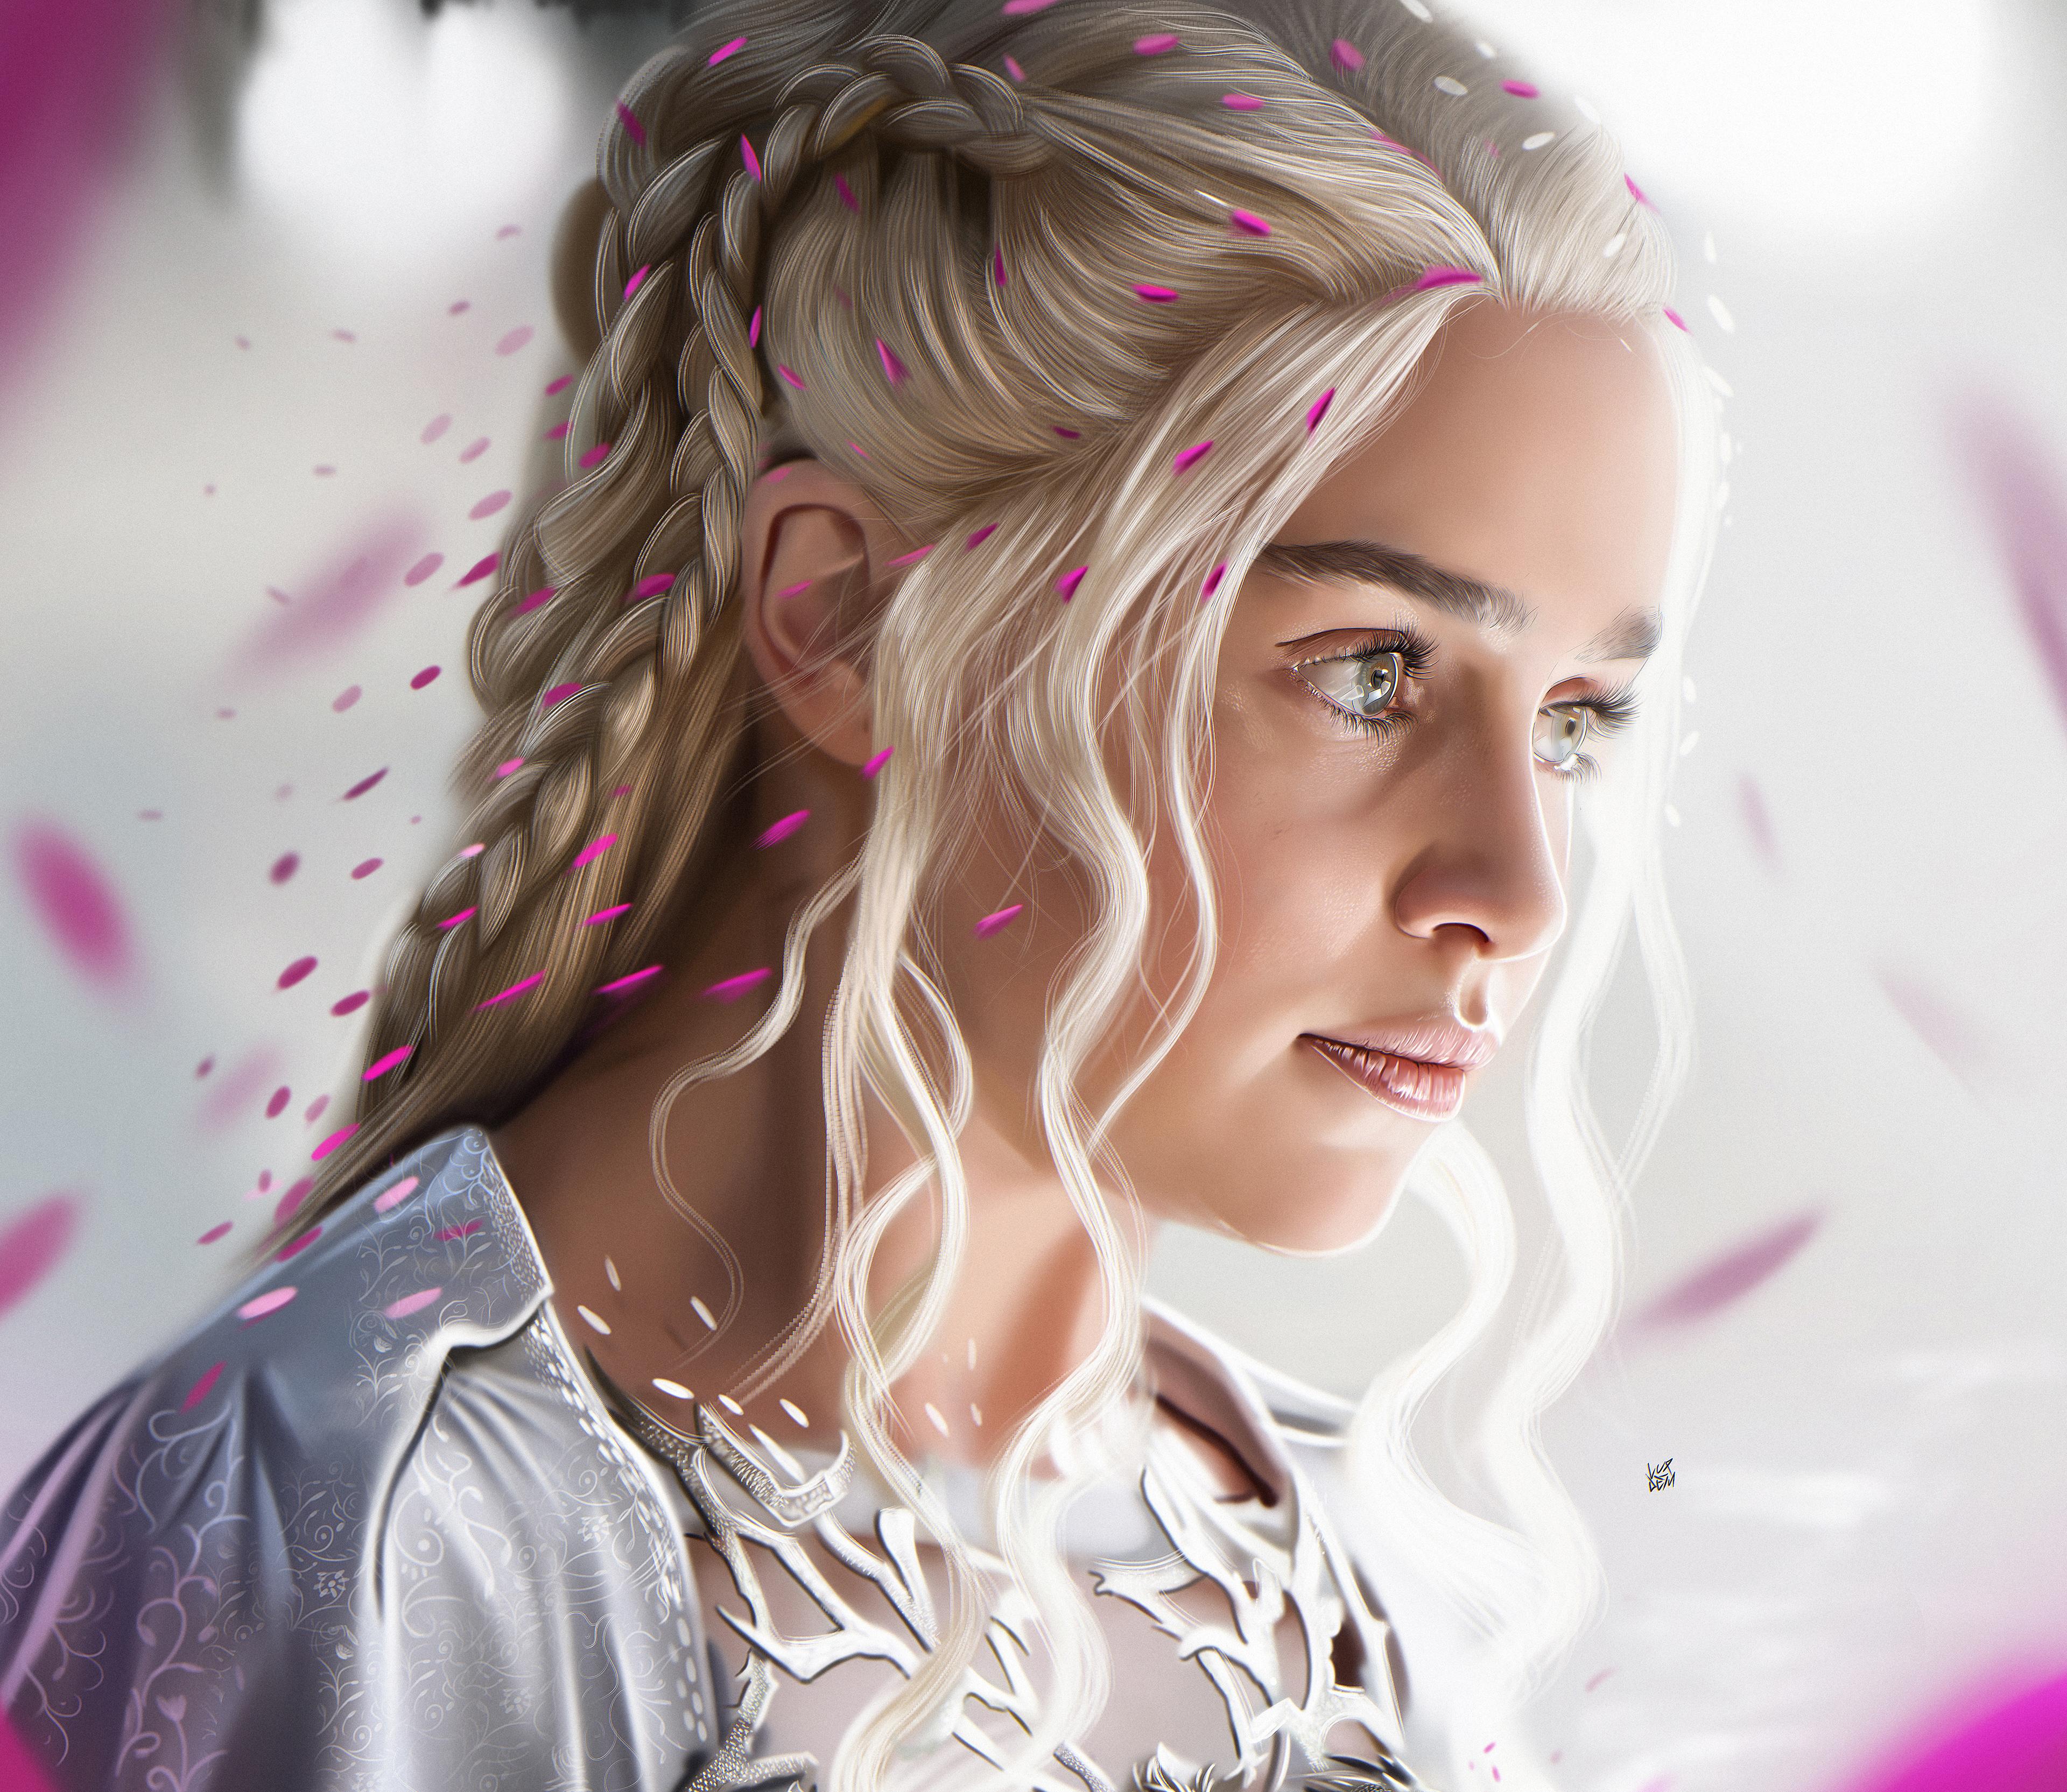 K, #Emilia Clarke, #Daenerys Targaryen. TV Series